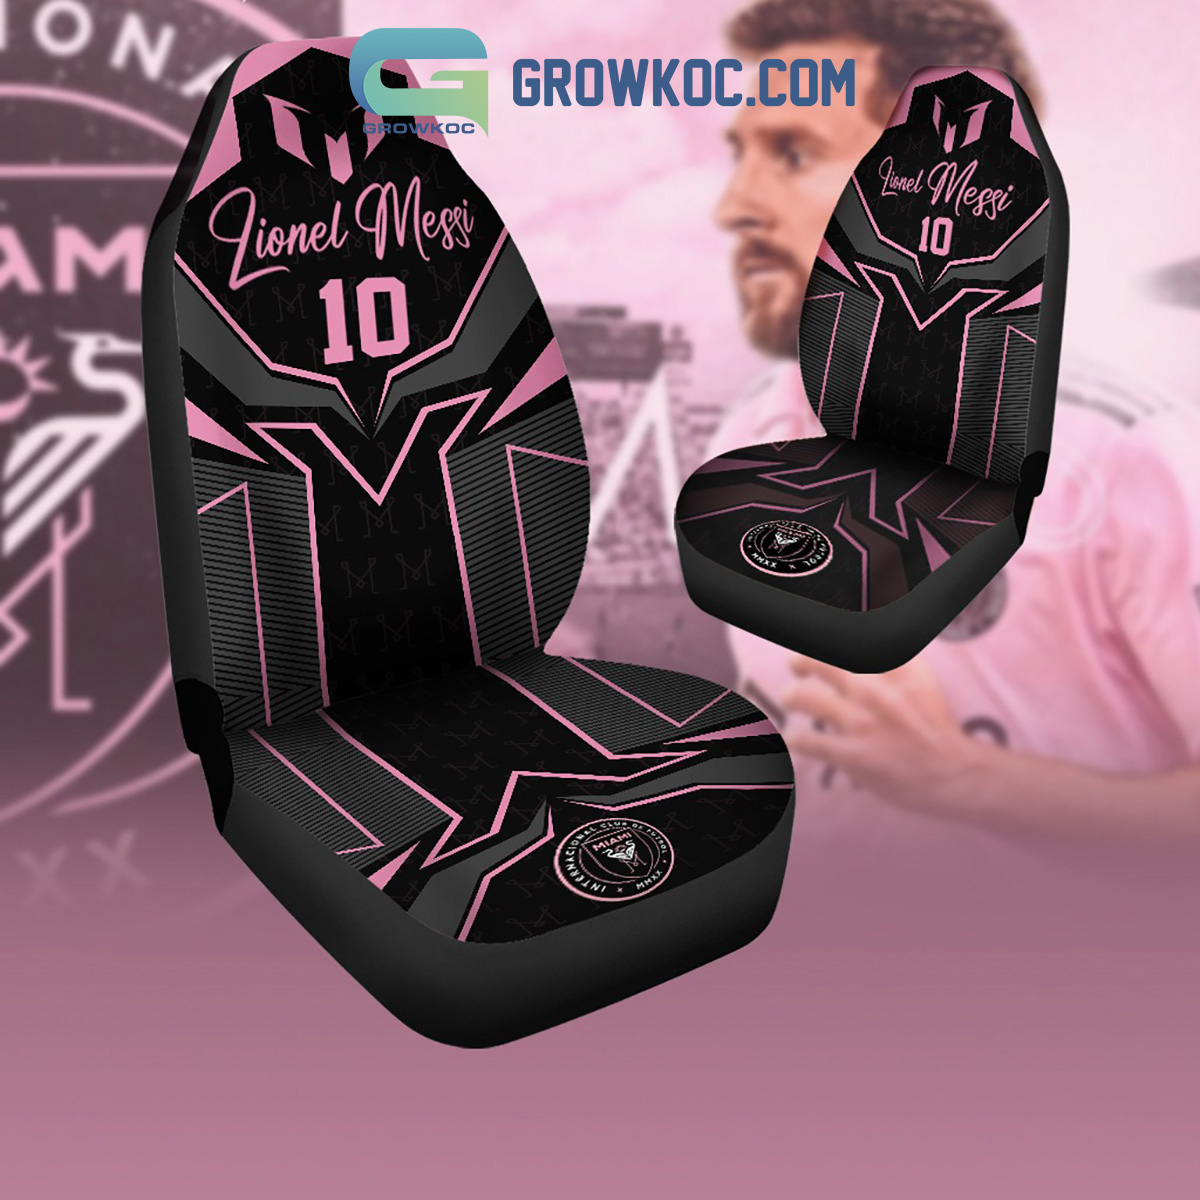 Messi 10 Miami FC Black Design Personalized Baseball Jersey - Growkoc